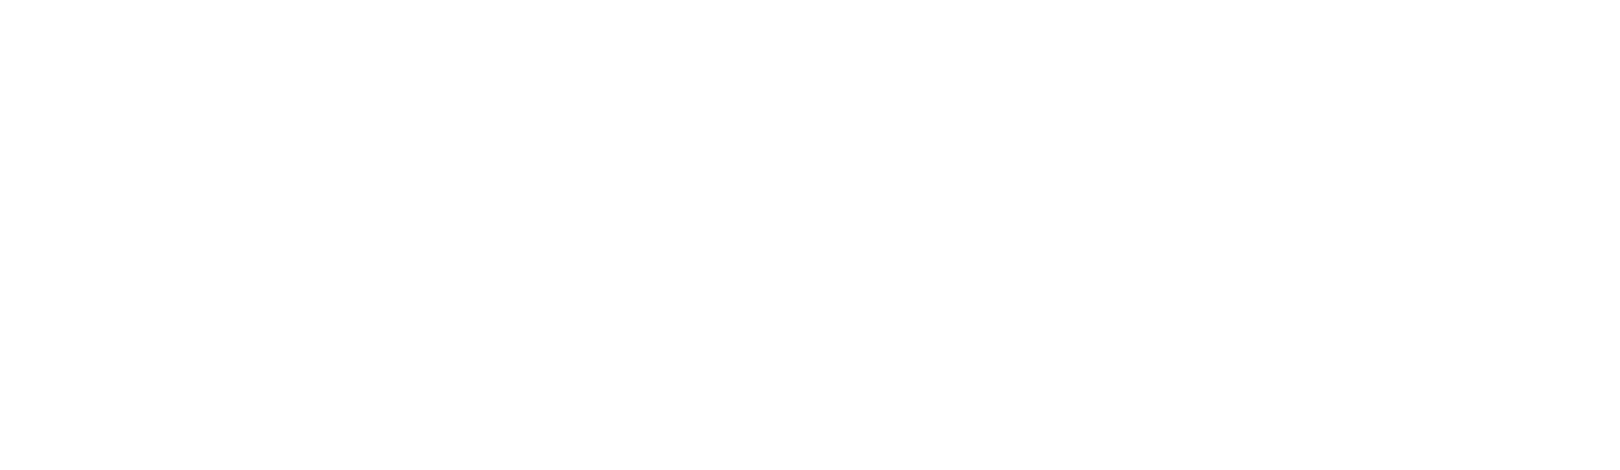 Pet Parents: Veronica, Jason y Milan Nan mascotanan: Oreo, Coco y Luca